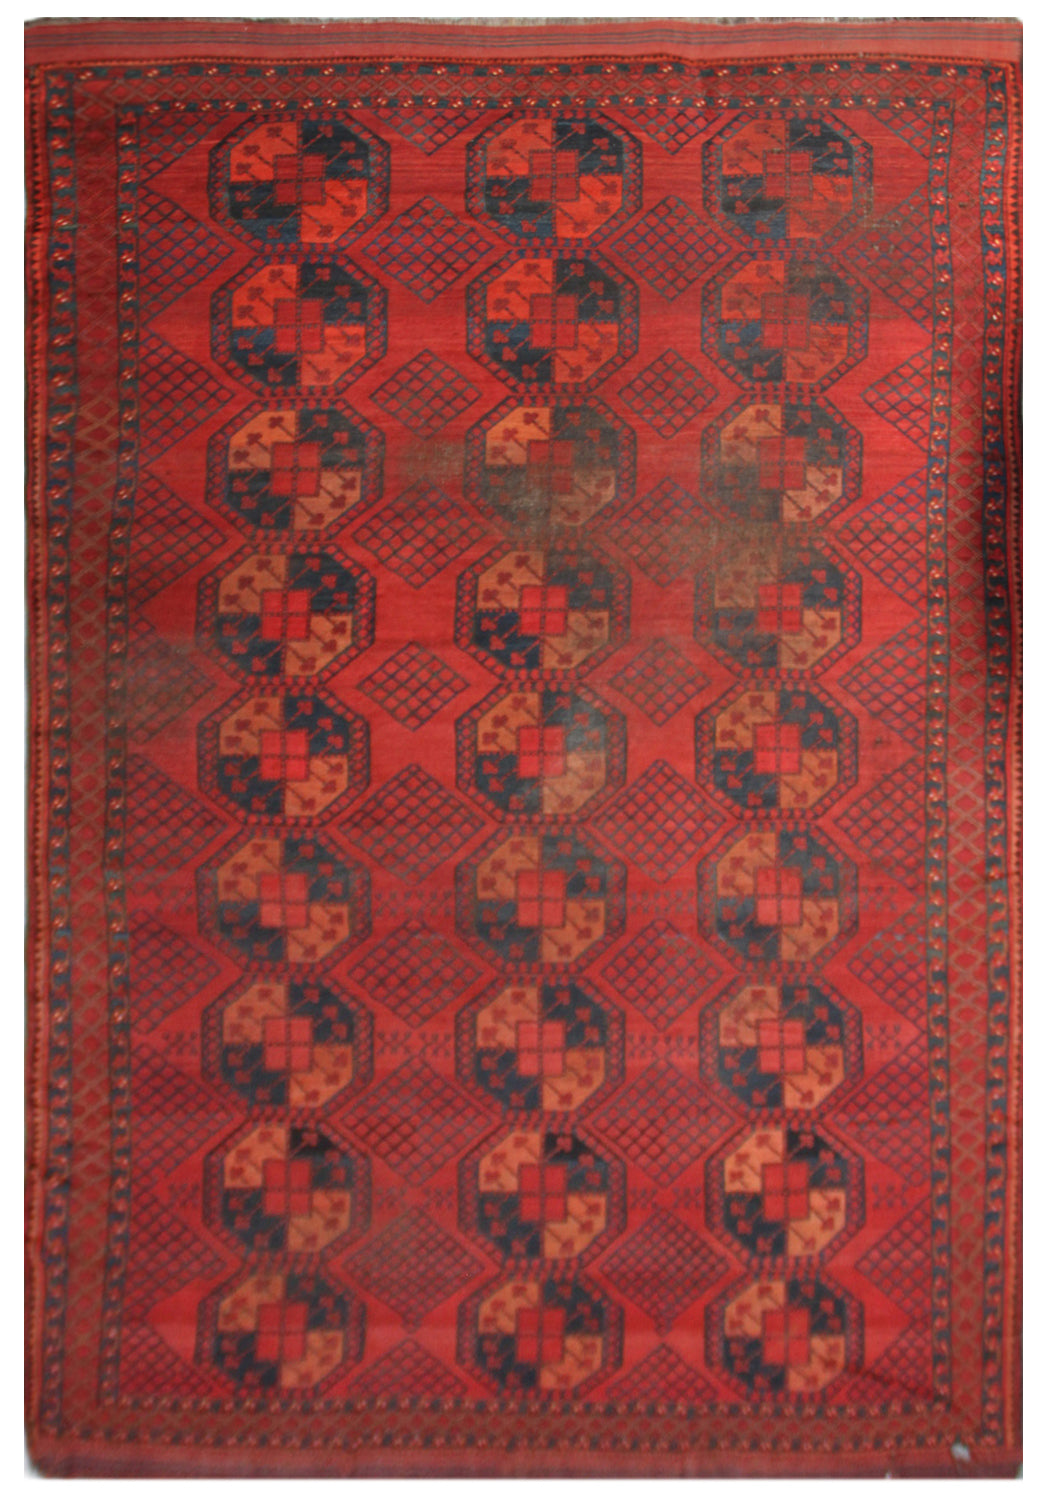 11'x15' Red Antique Afghan Rug